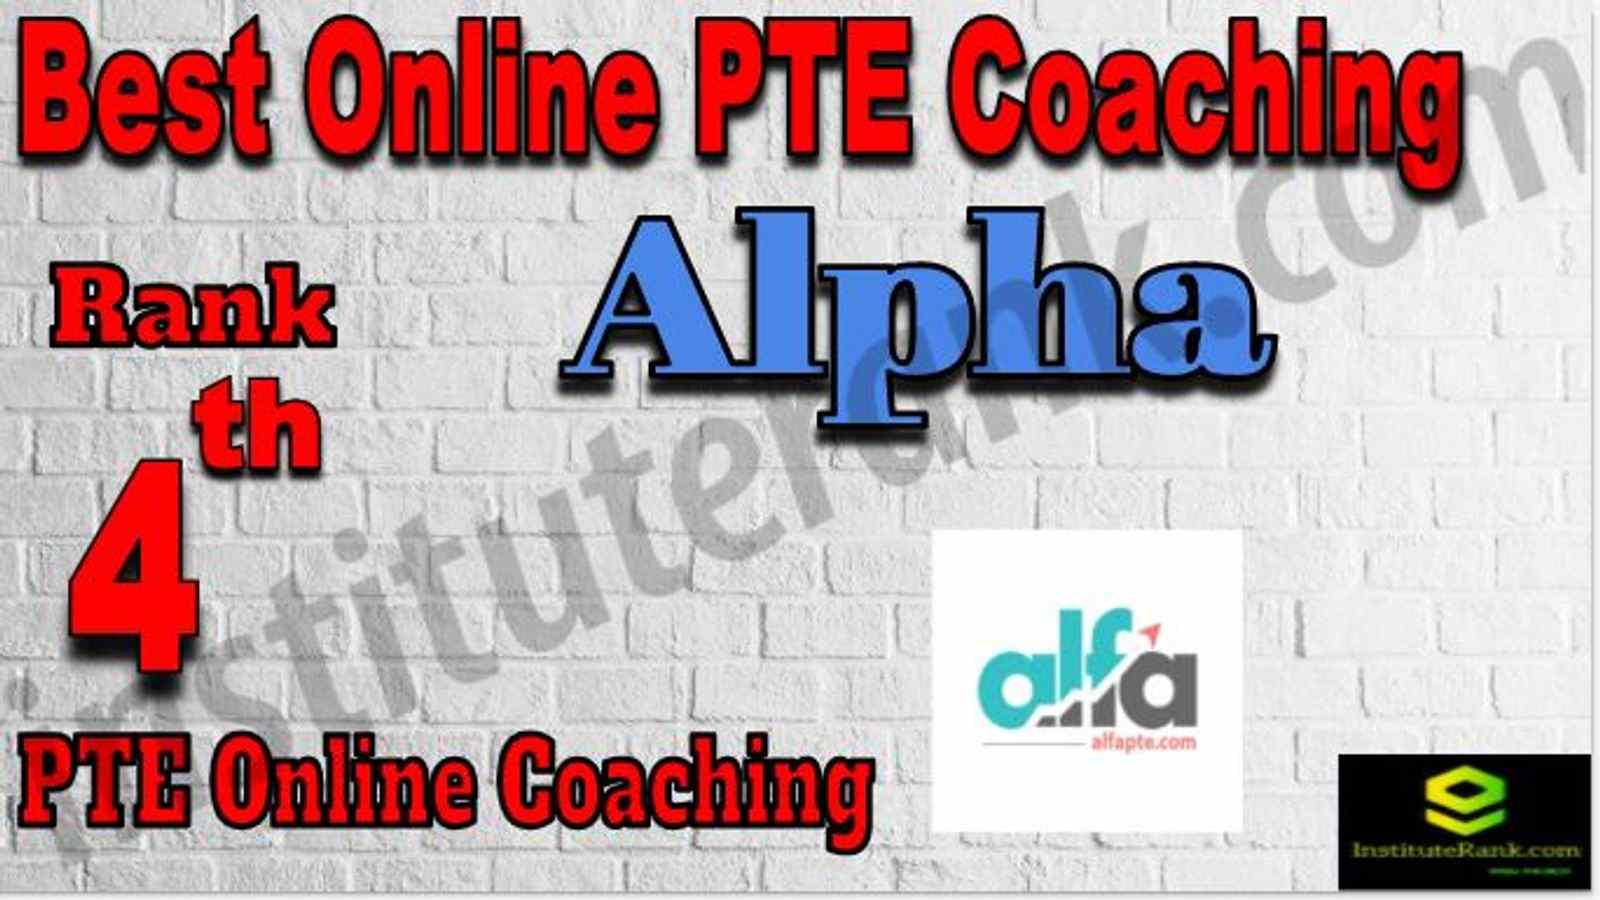 Rank 4 Best Online PTE Coaching